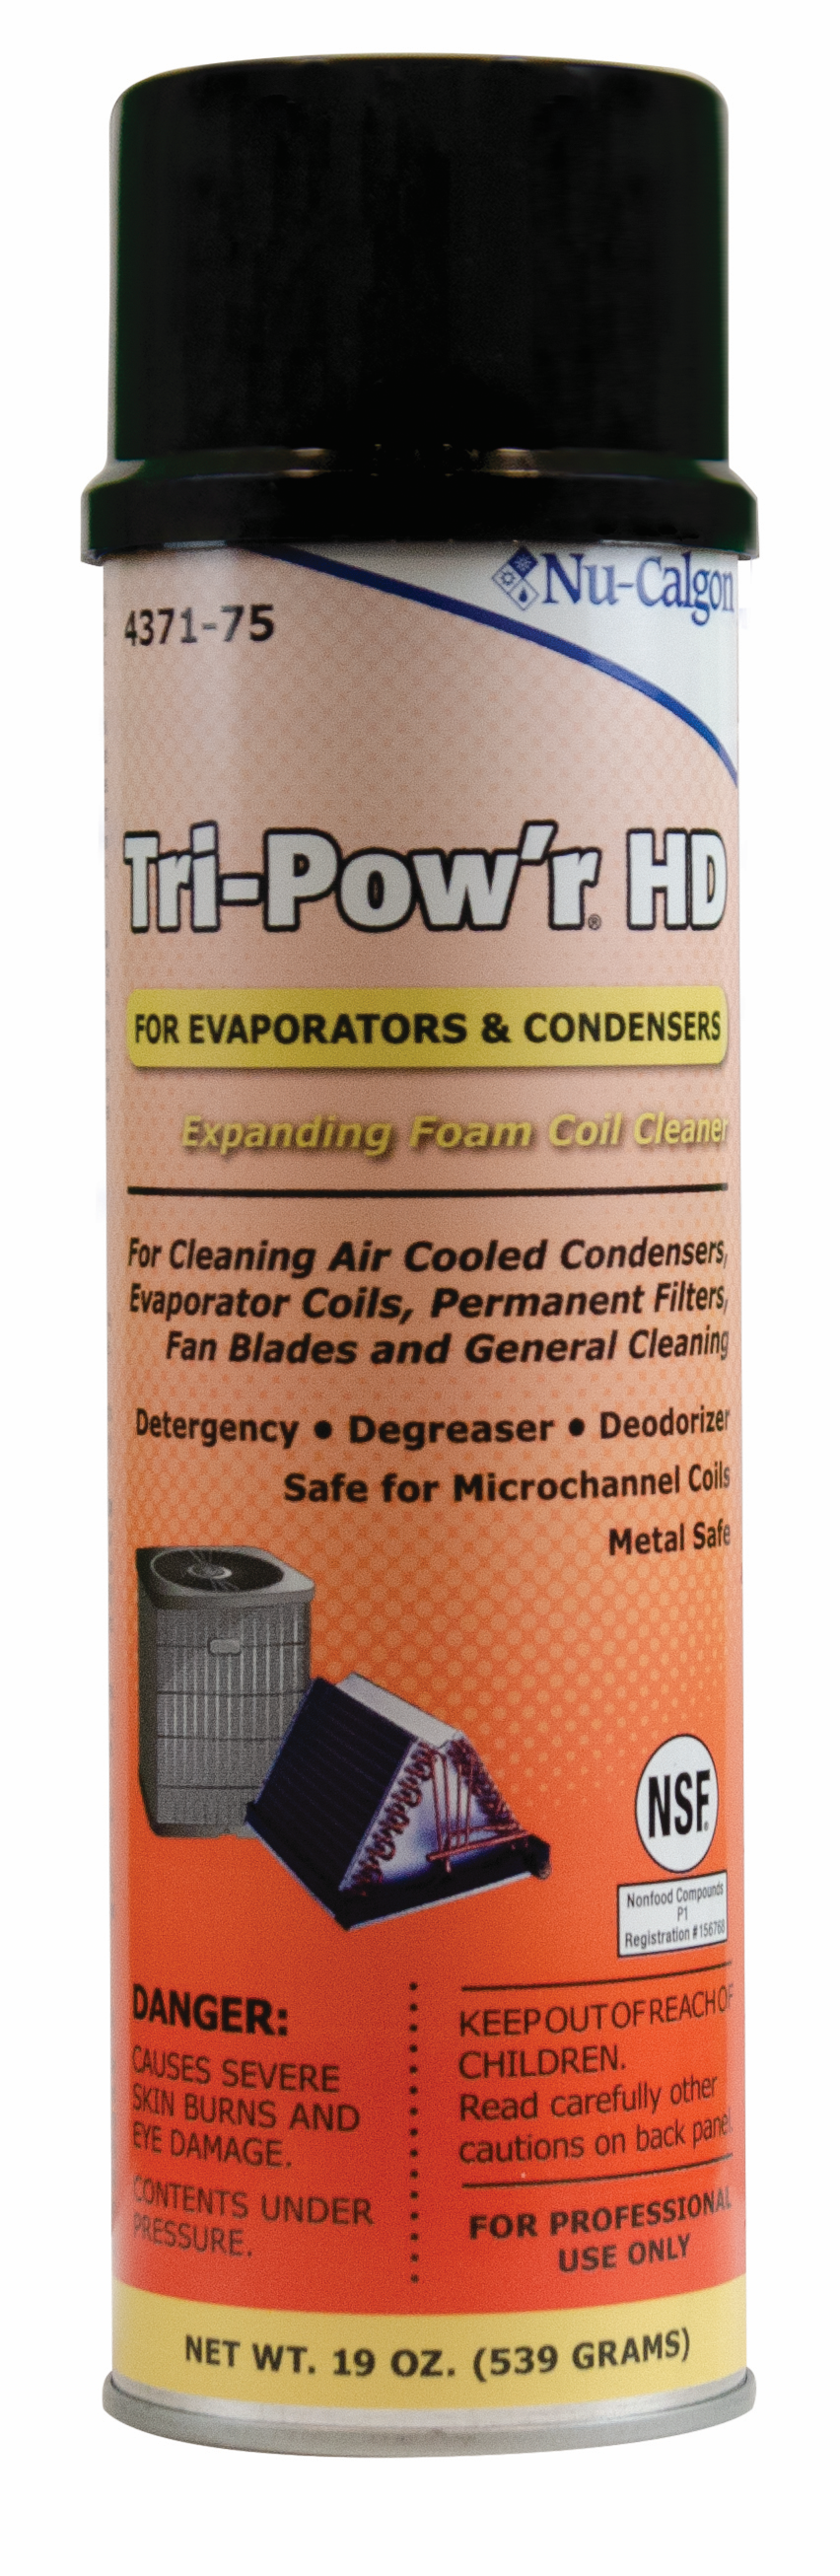 4371-75 TRI-POWR HD AEROSOL COIL CLEANE - HVAC Equipment